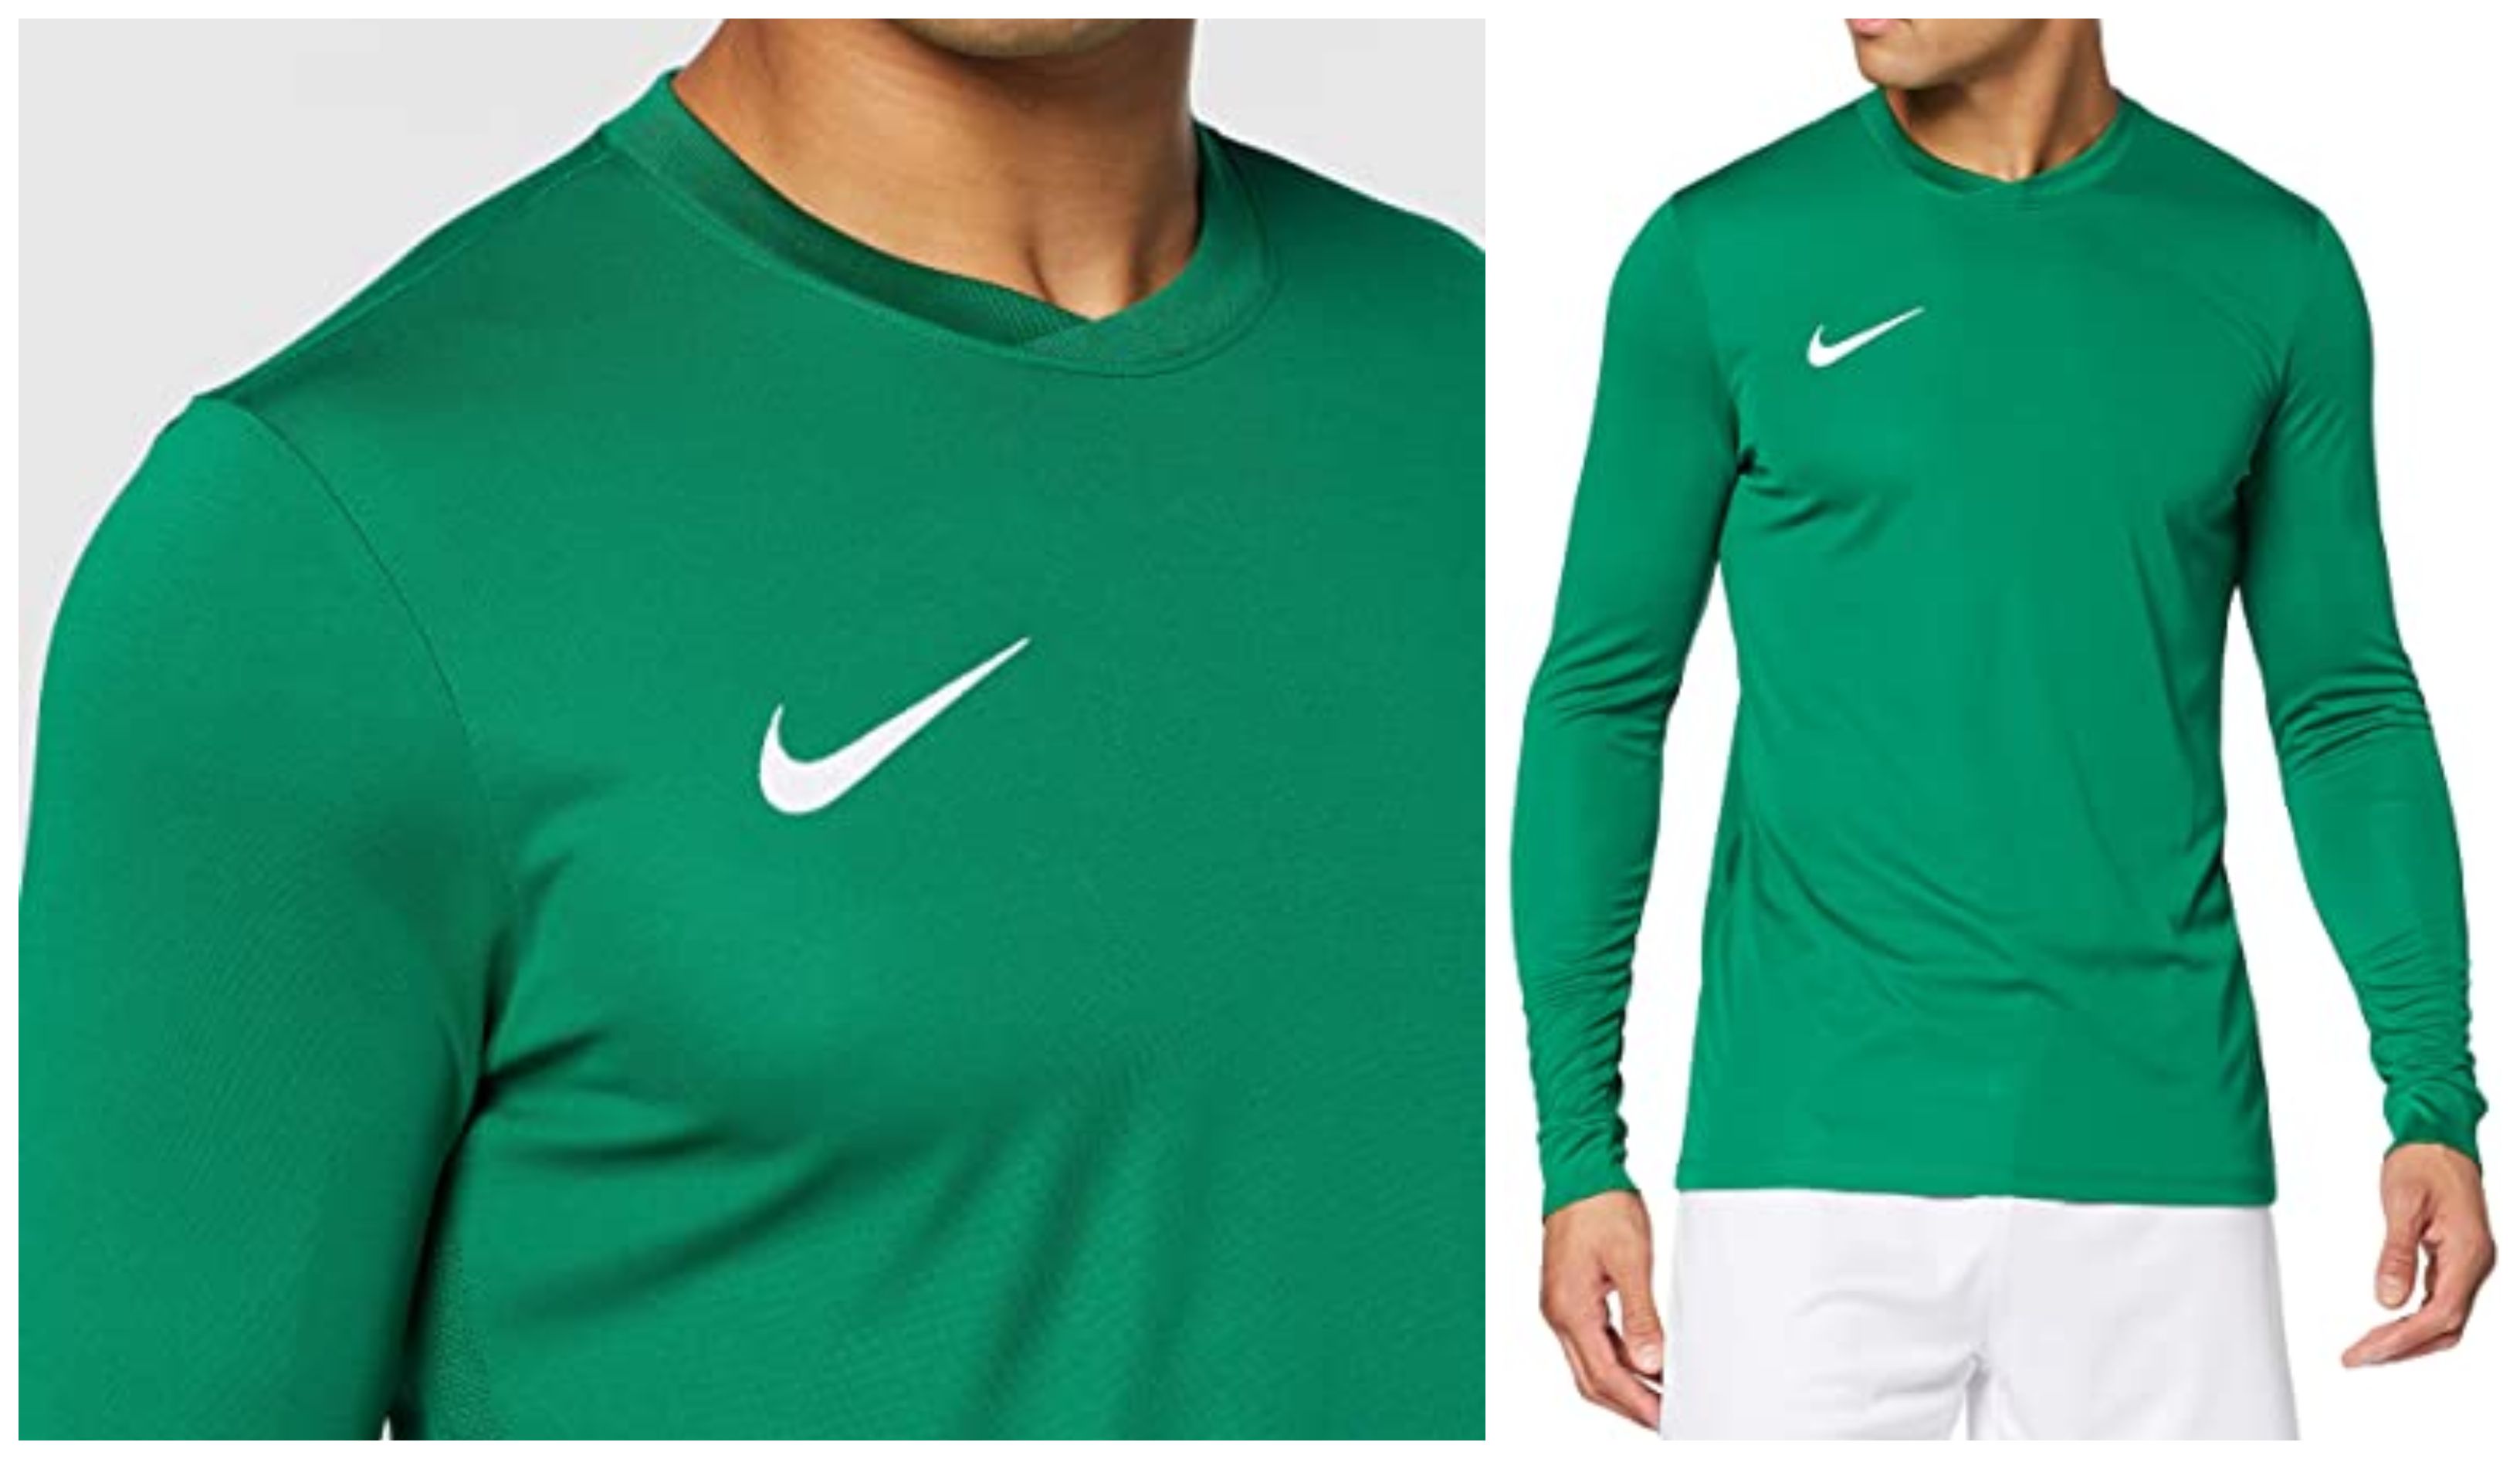 Nike triunfa con esta camiseta manga de deporte